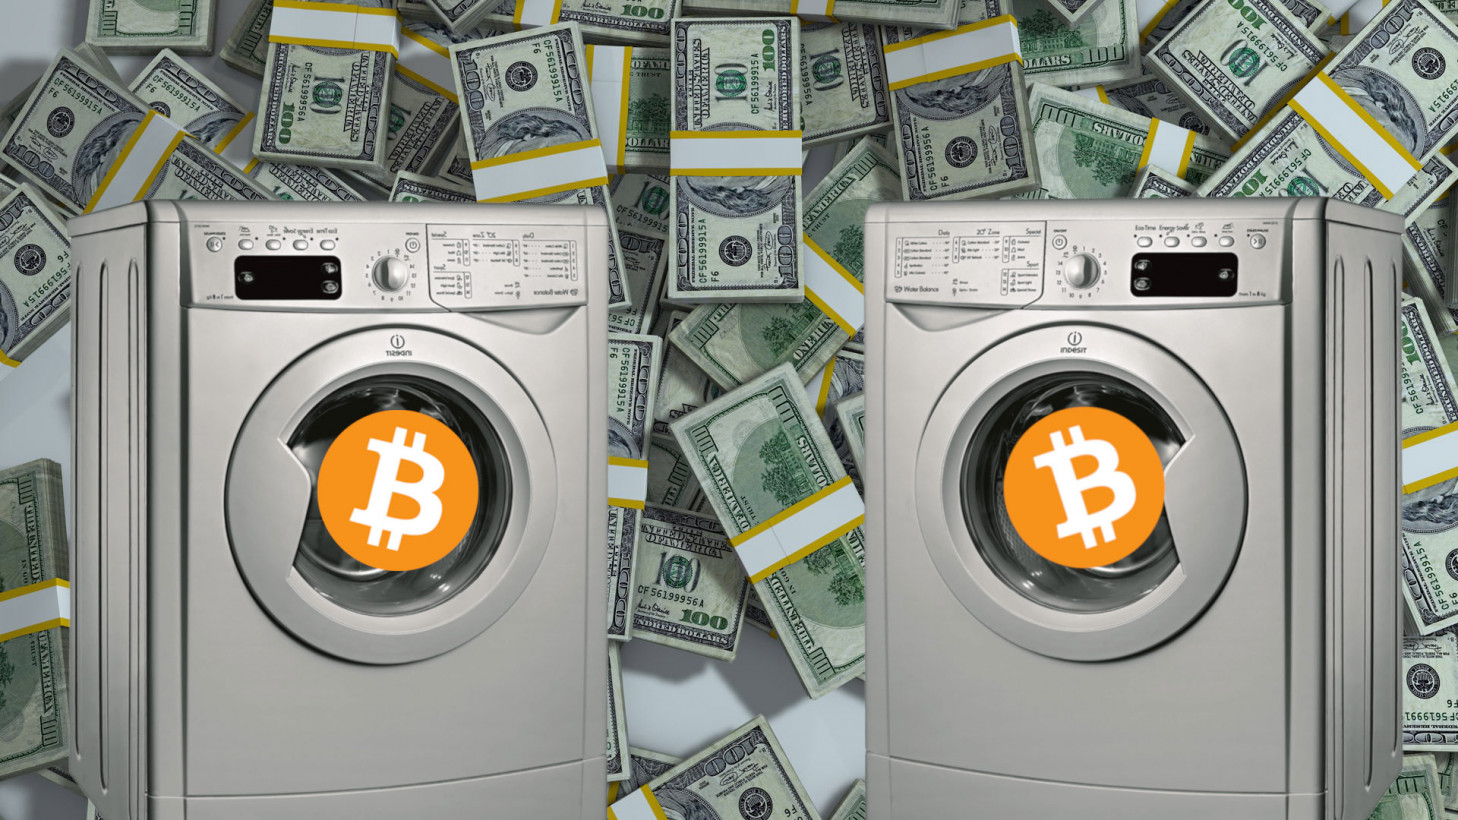 Money laundering through cryptocurrencies